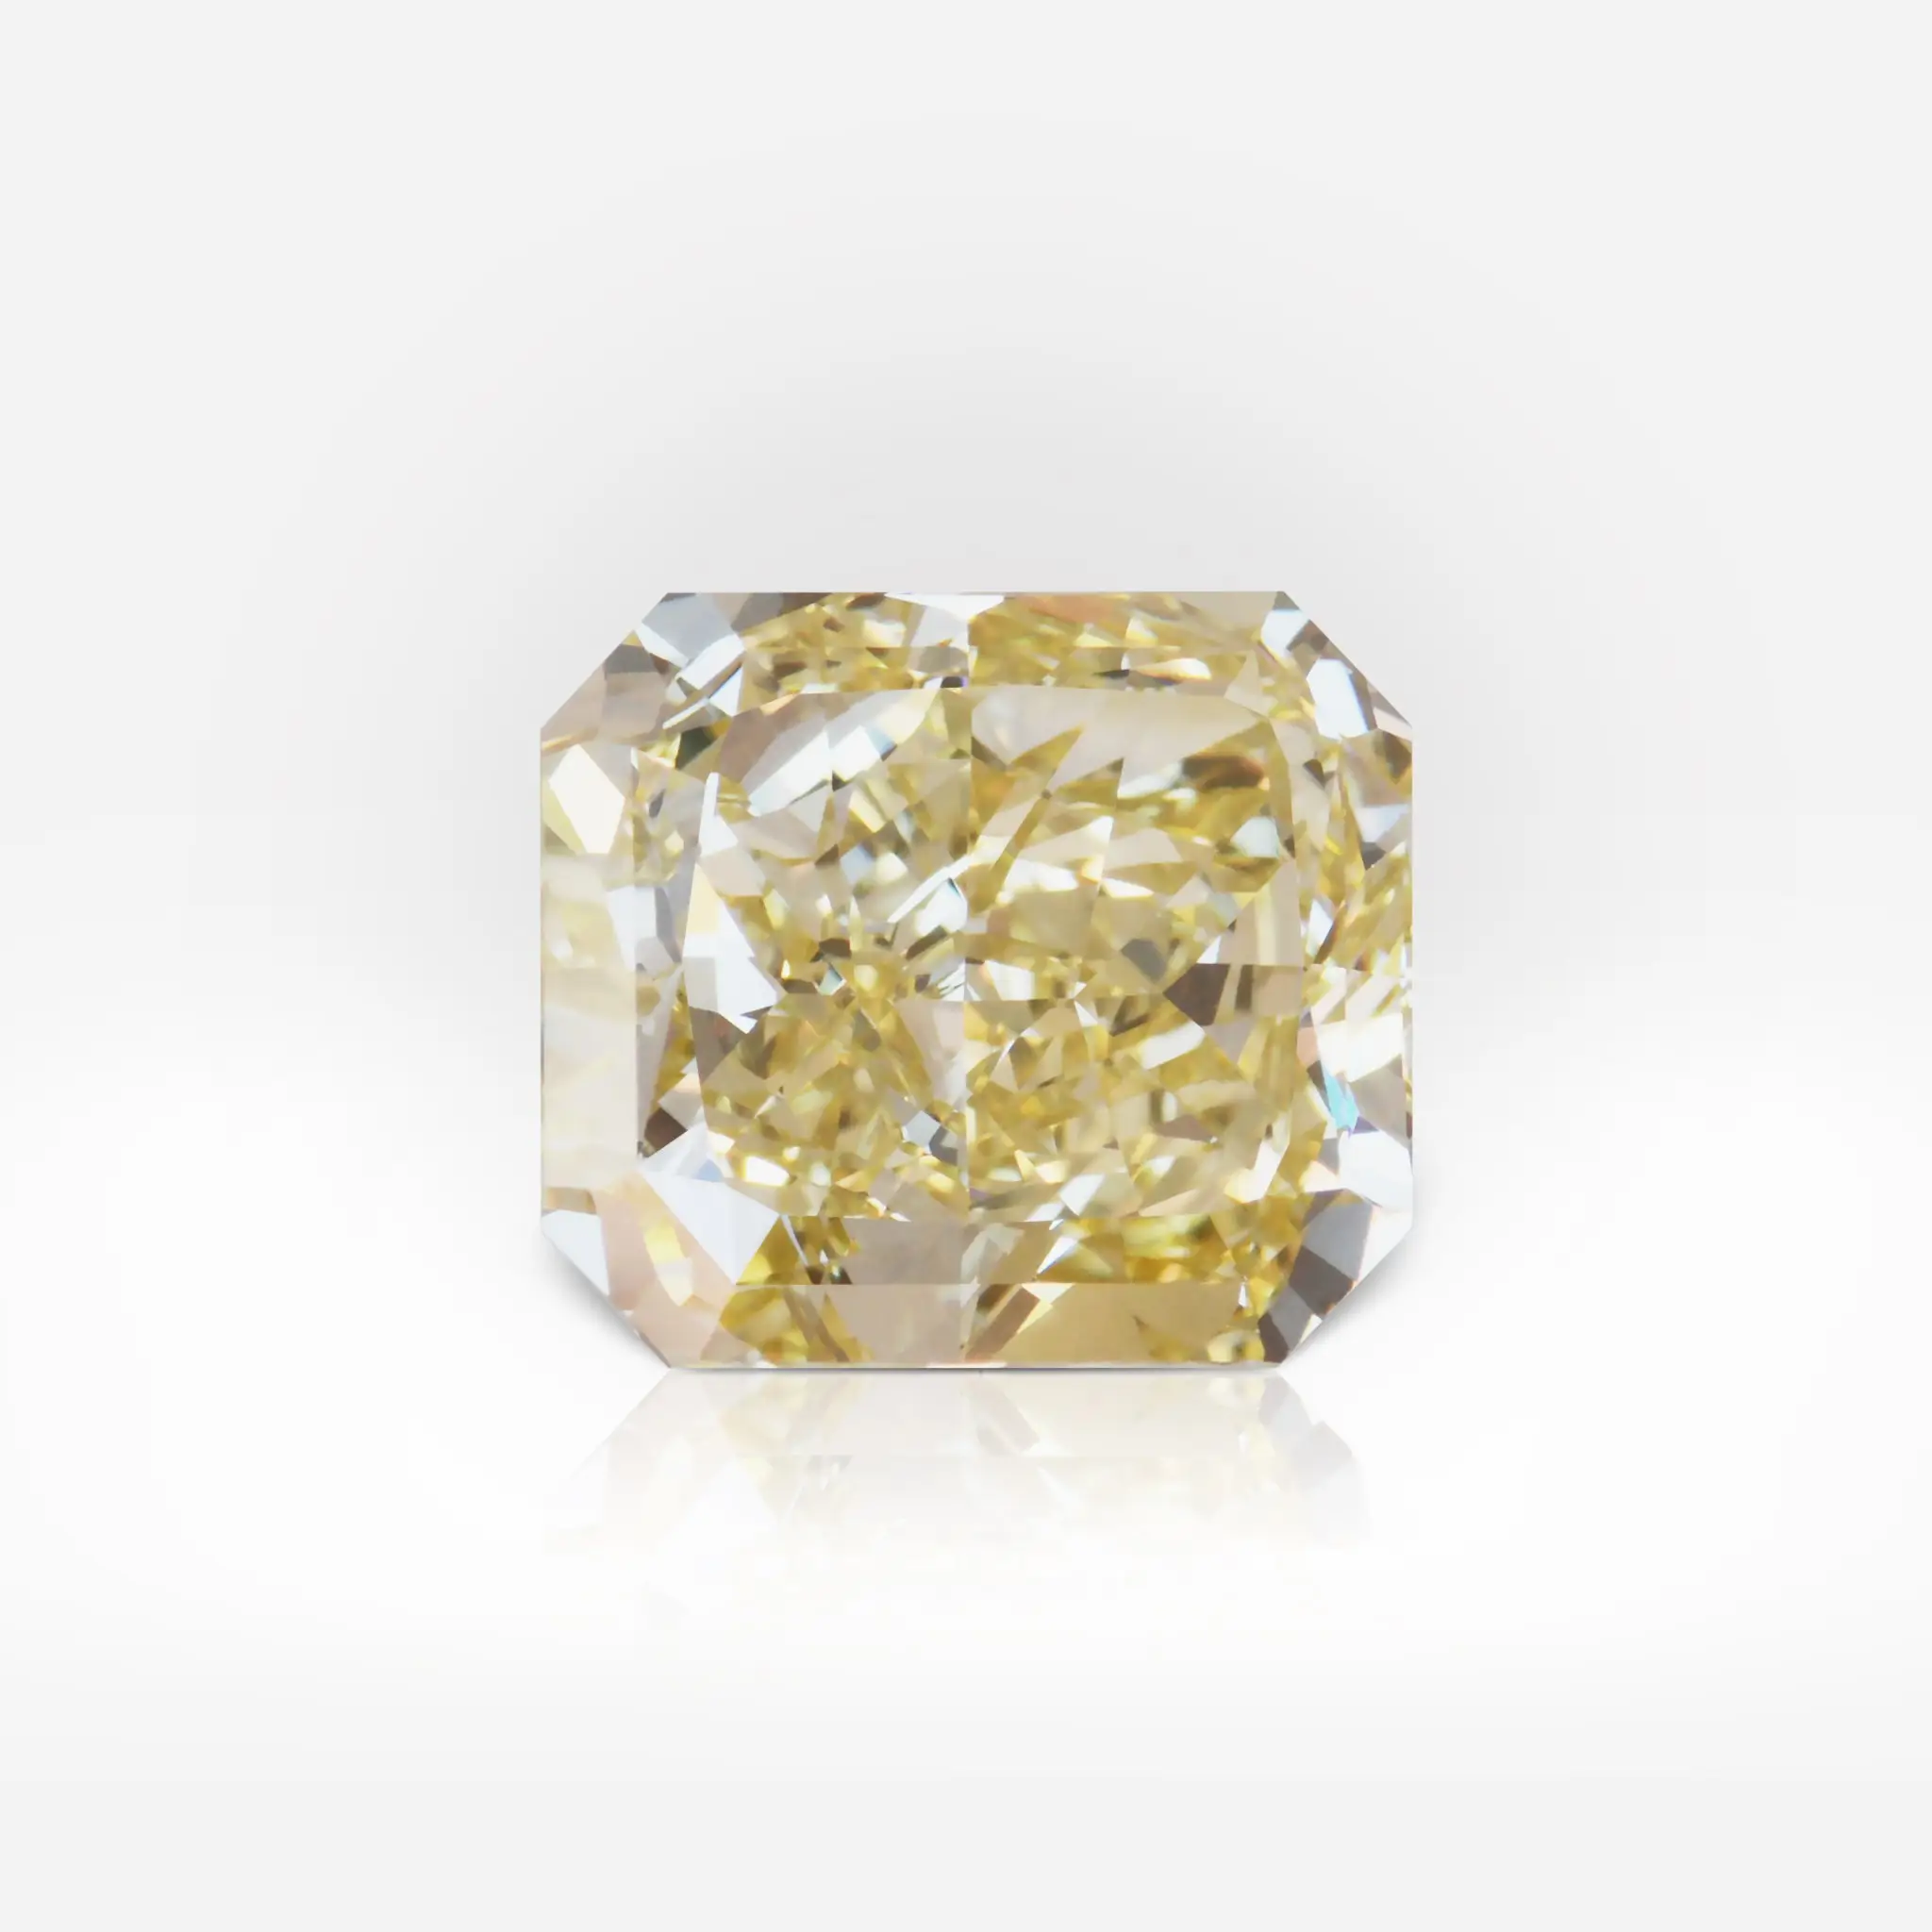 7.05 carat Fancy Intense Yellow VVS2 Radiant Shape Diamond GIA - picture 1